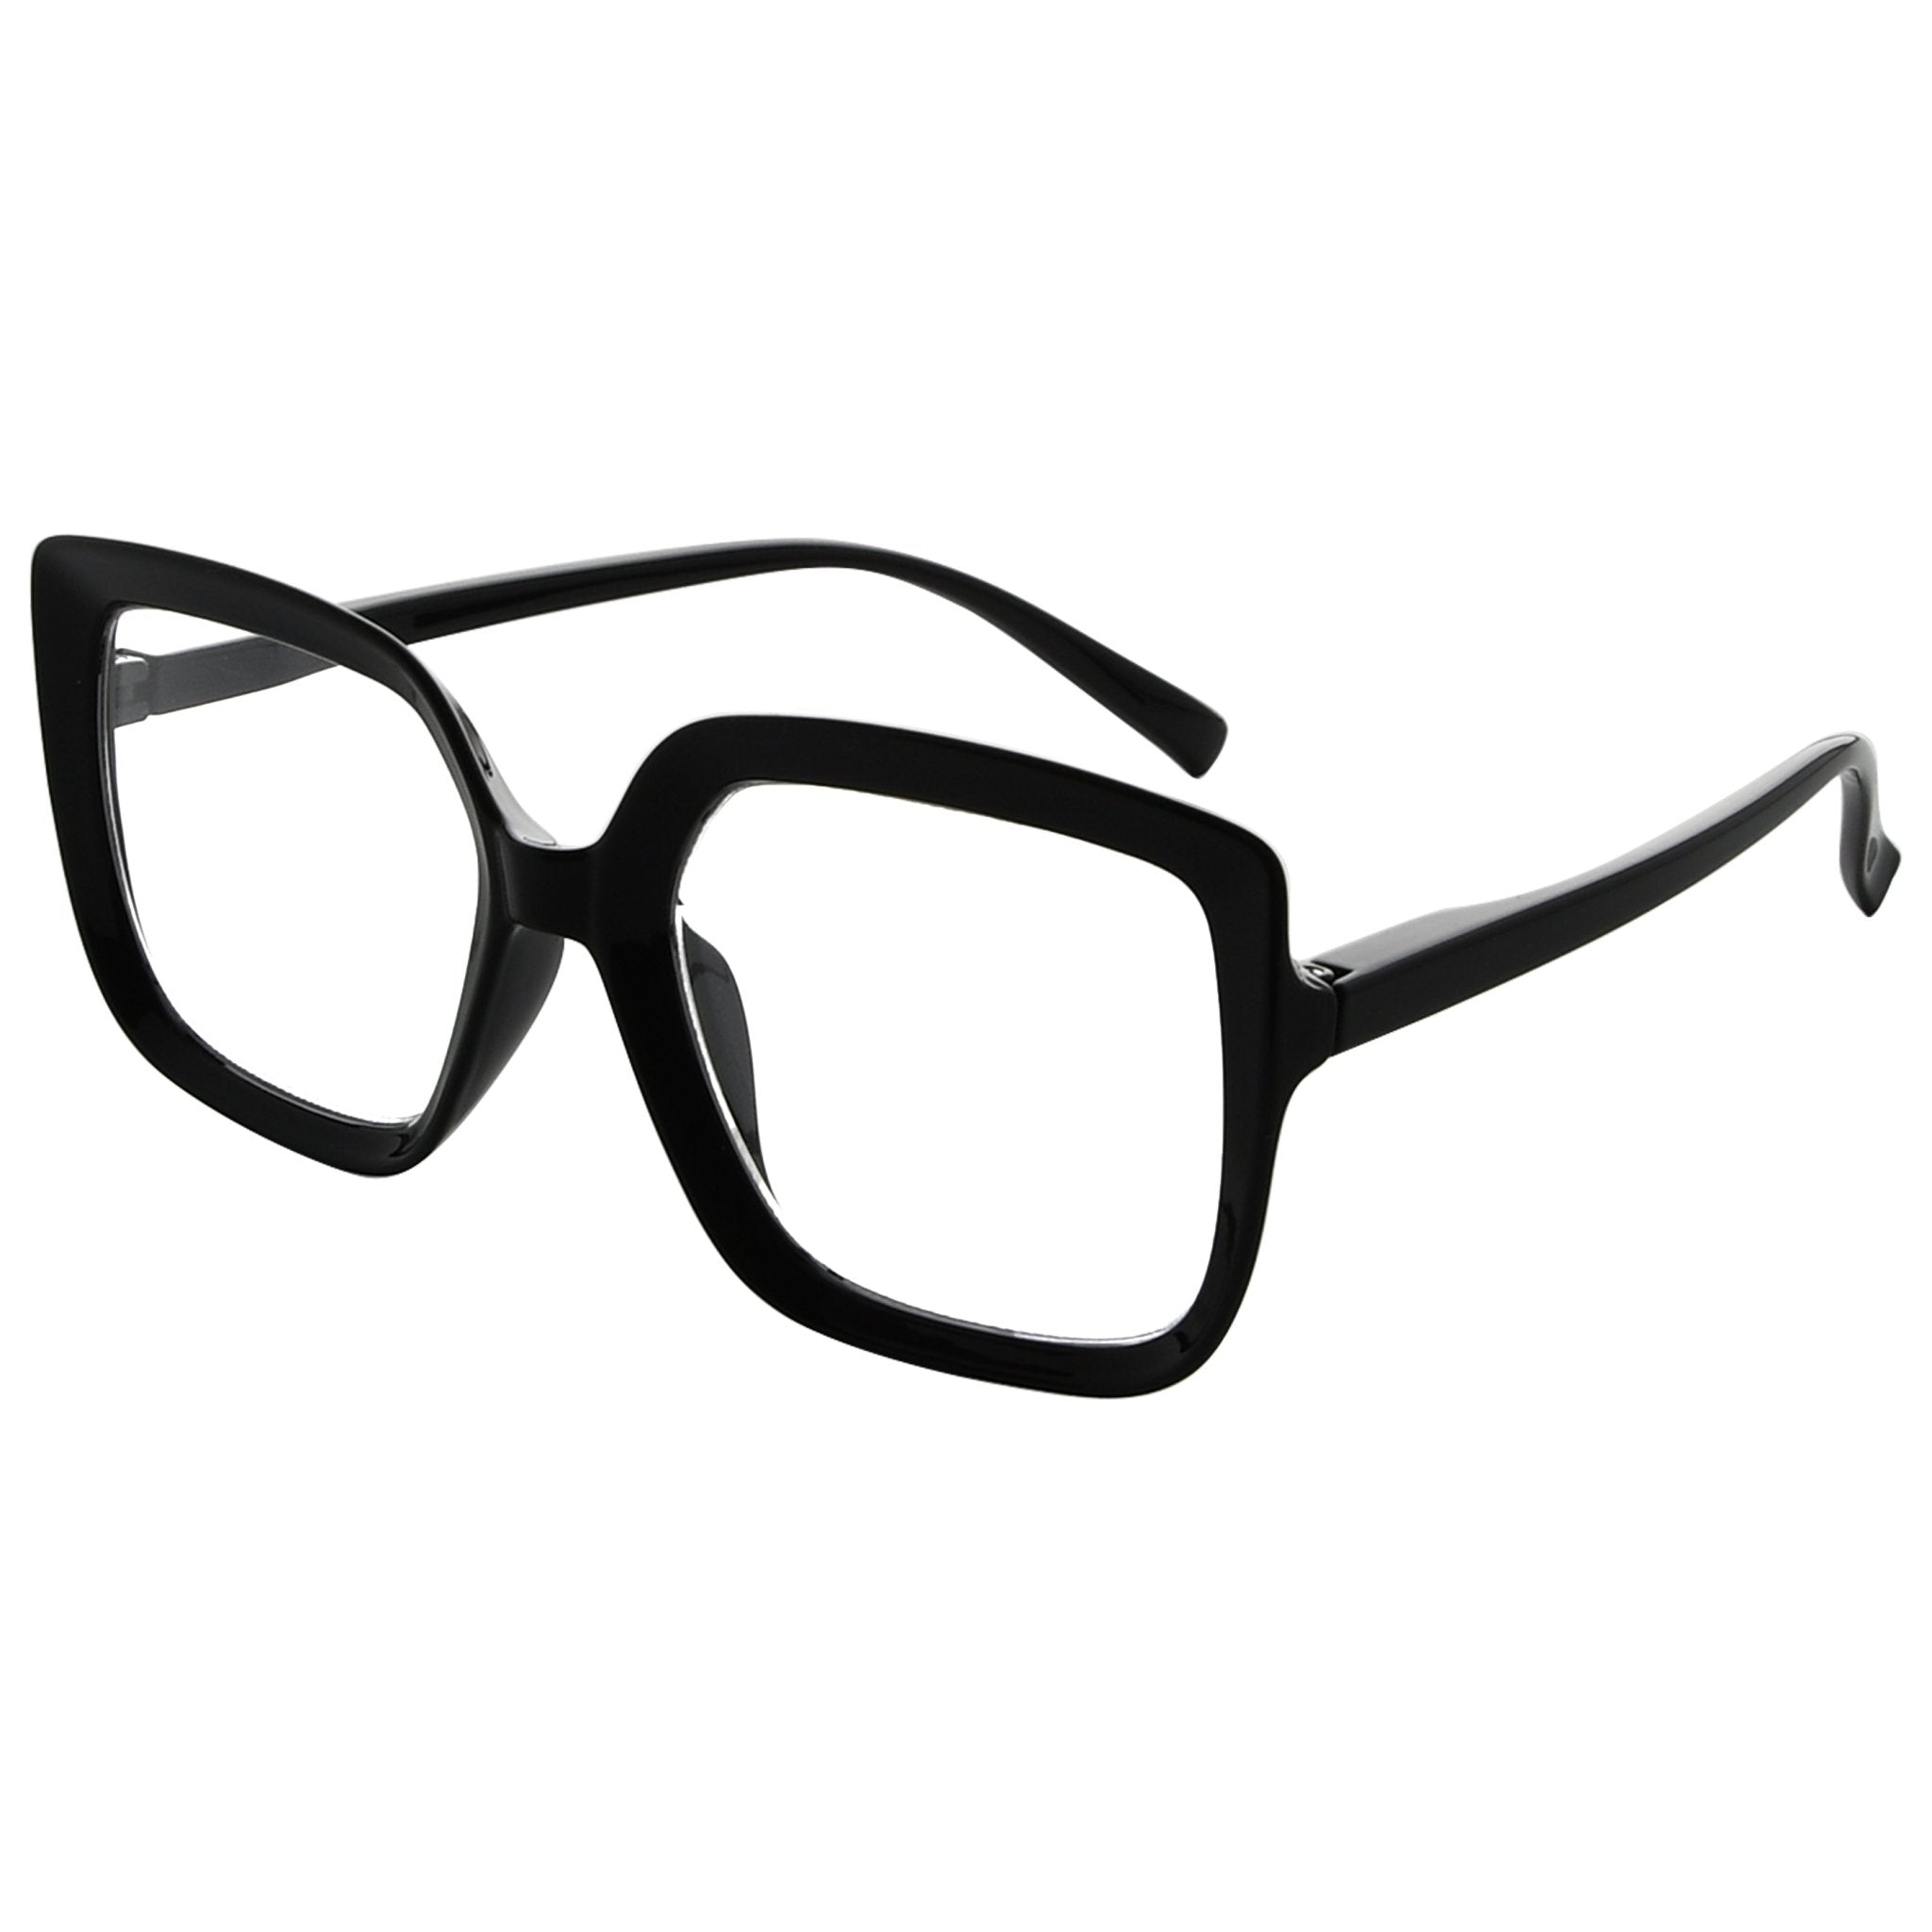 Stylish Classic Funky Frame Reading Glasses Women